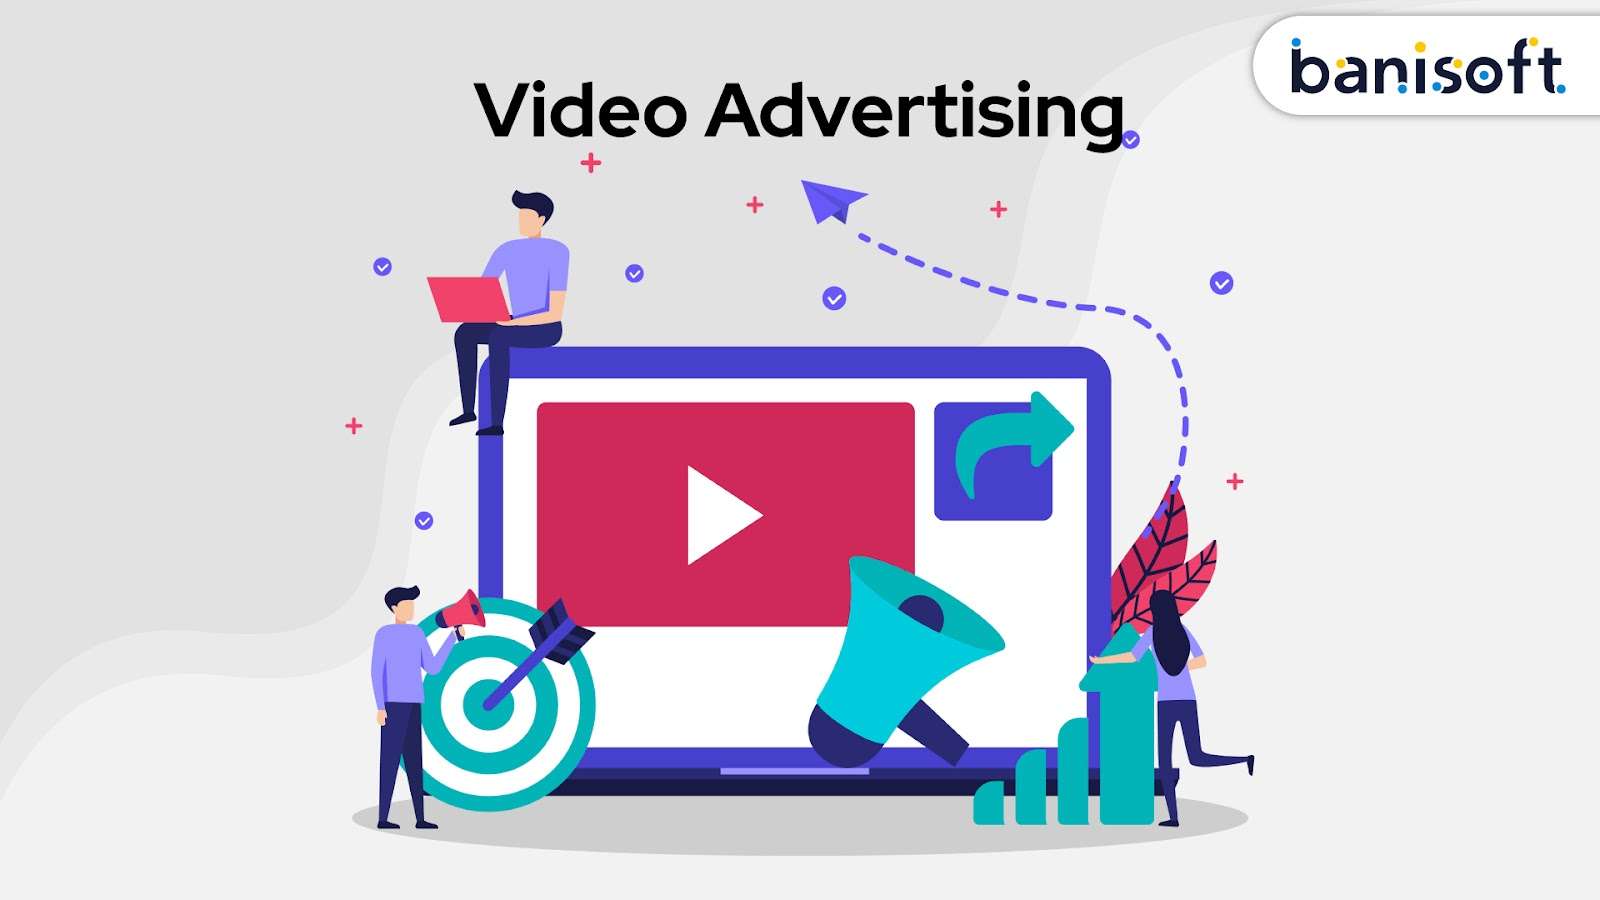 banisoft video advertising ads